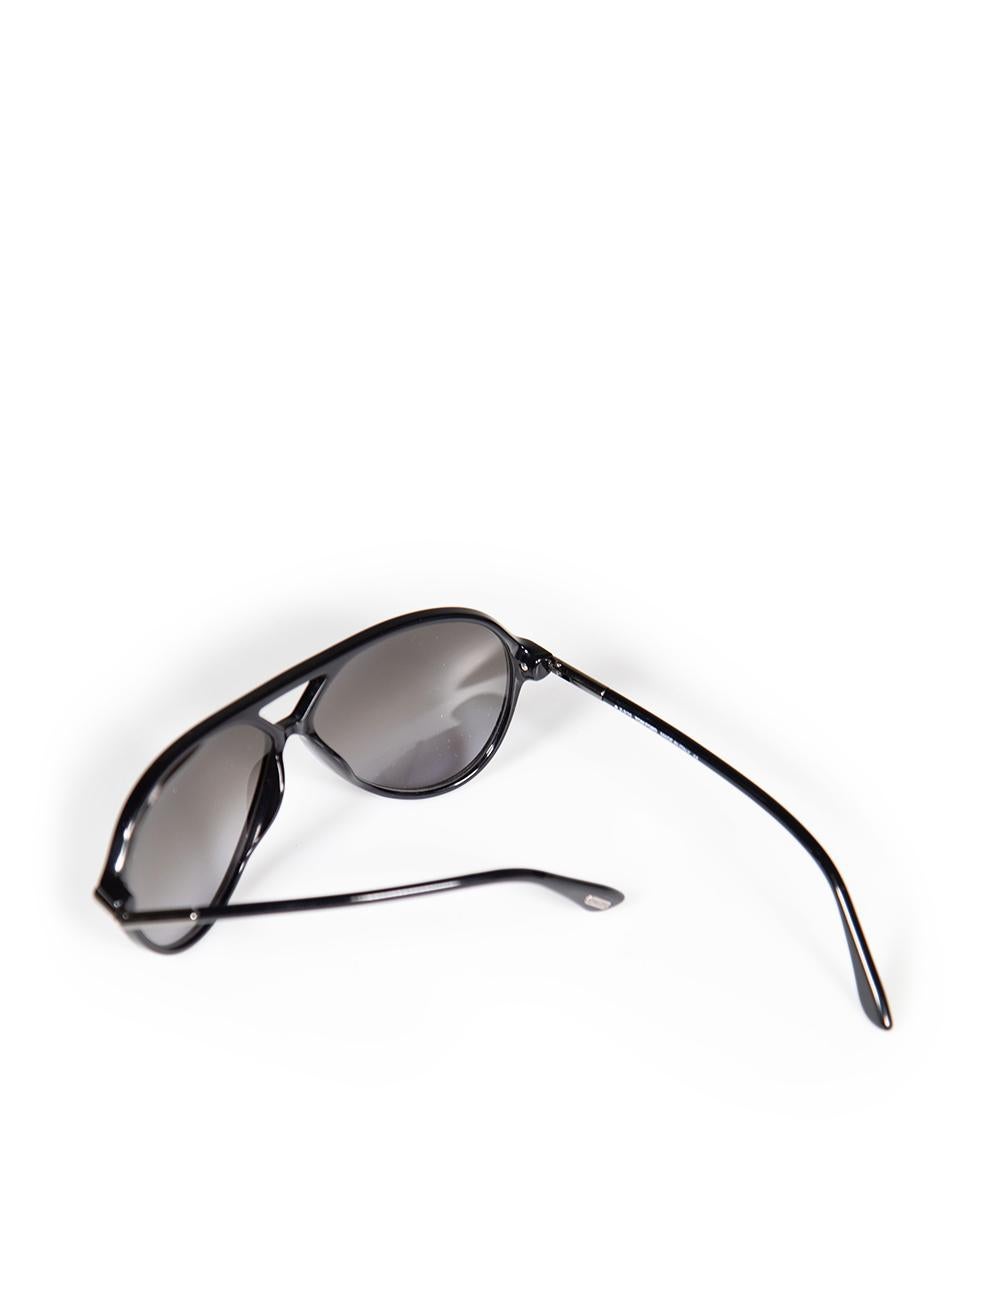 Tom Ford Shiny Black Leopold Sunglasses For Sale 3